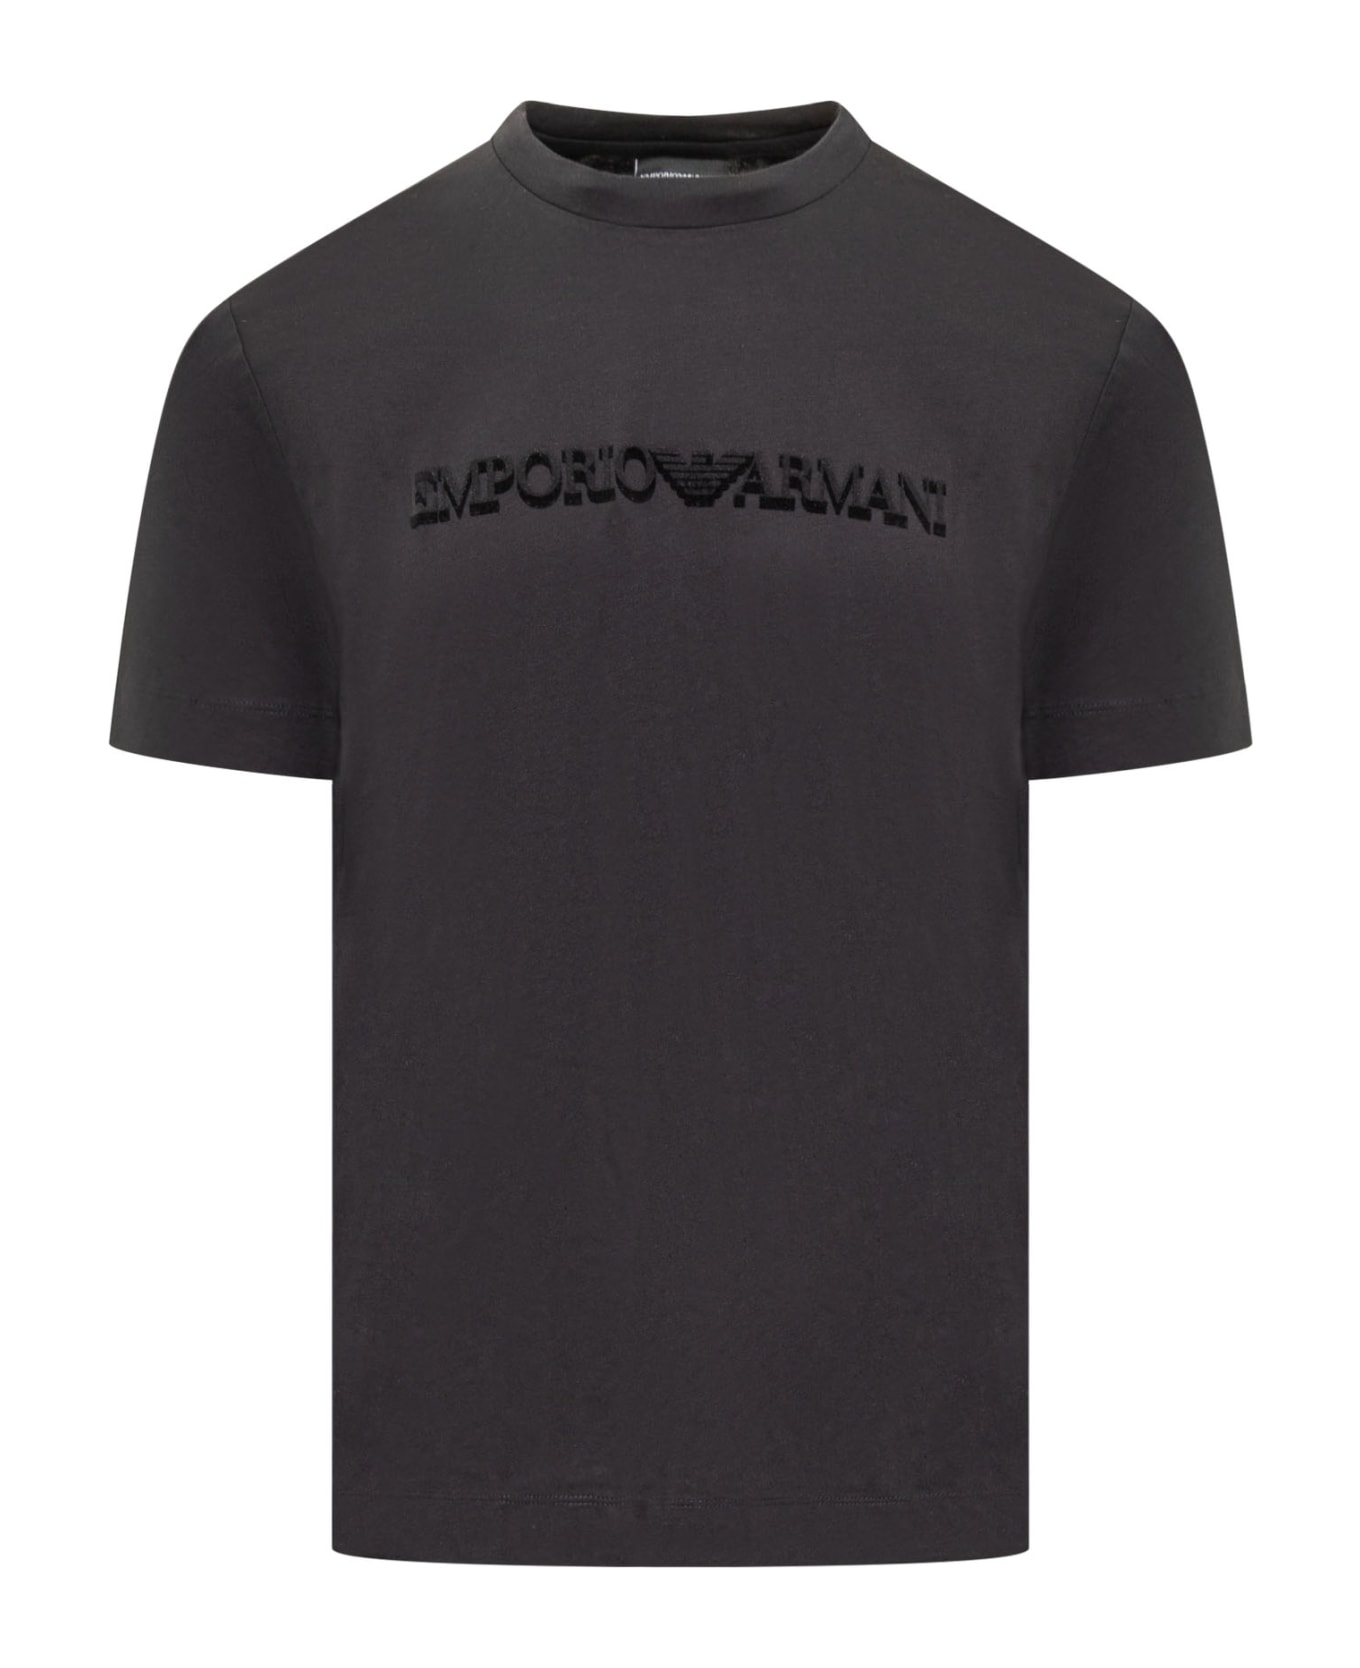 Emporio Armani T-shirt - NAVY LOGO